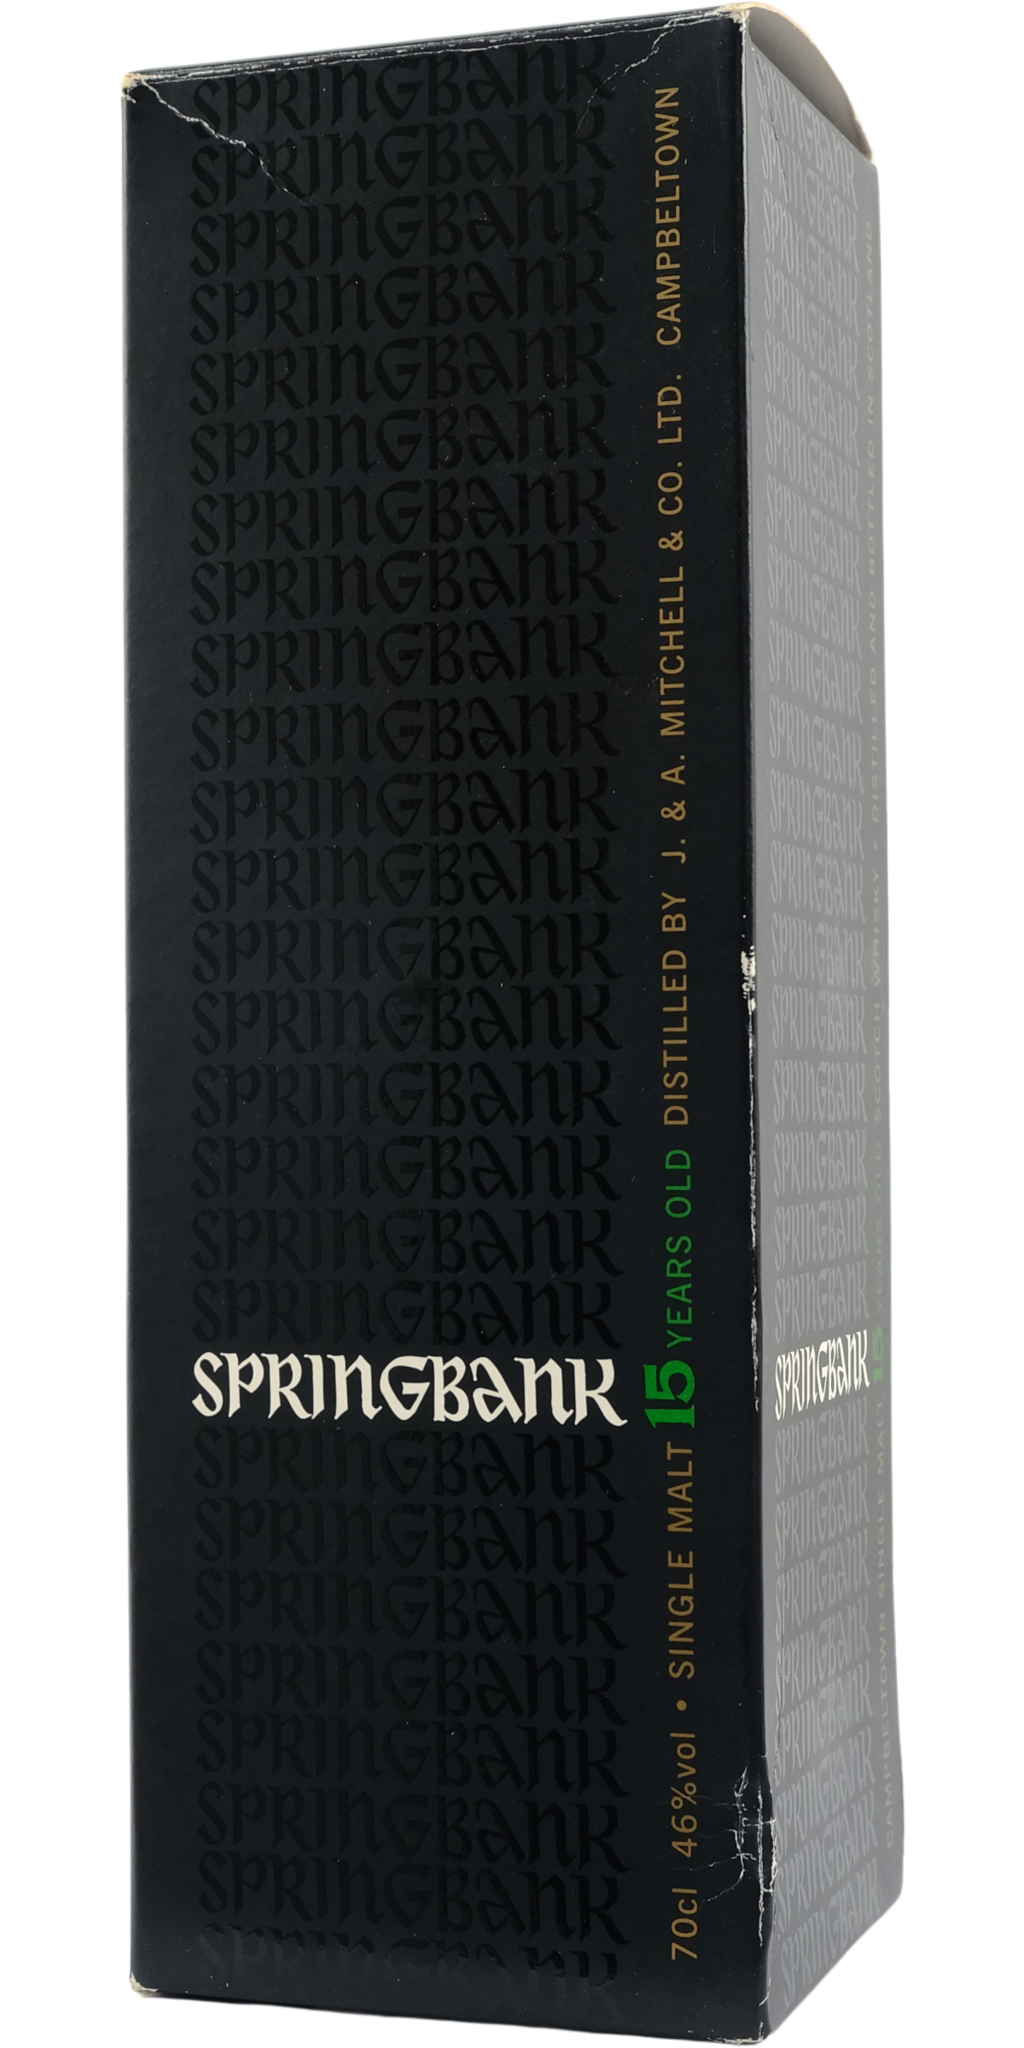 Springbank 15-year-old - 15/502